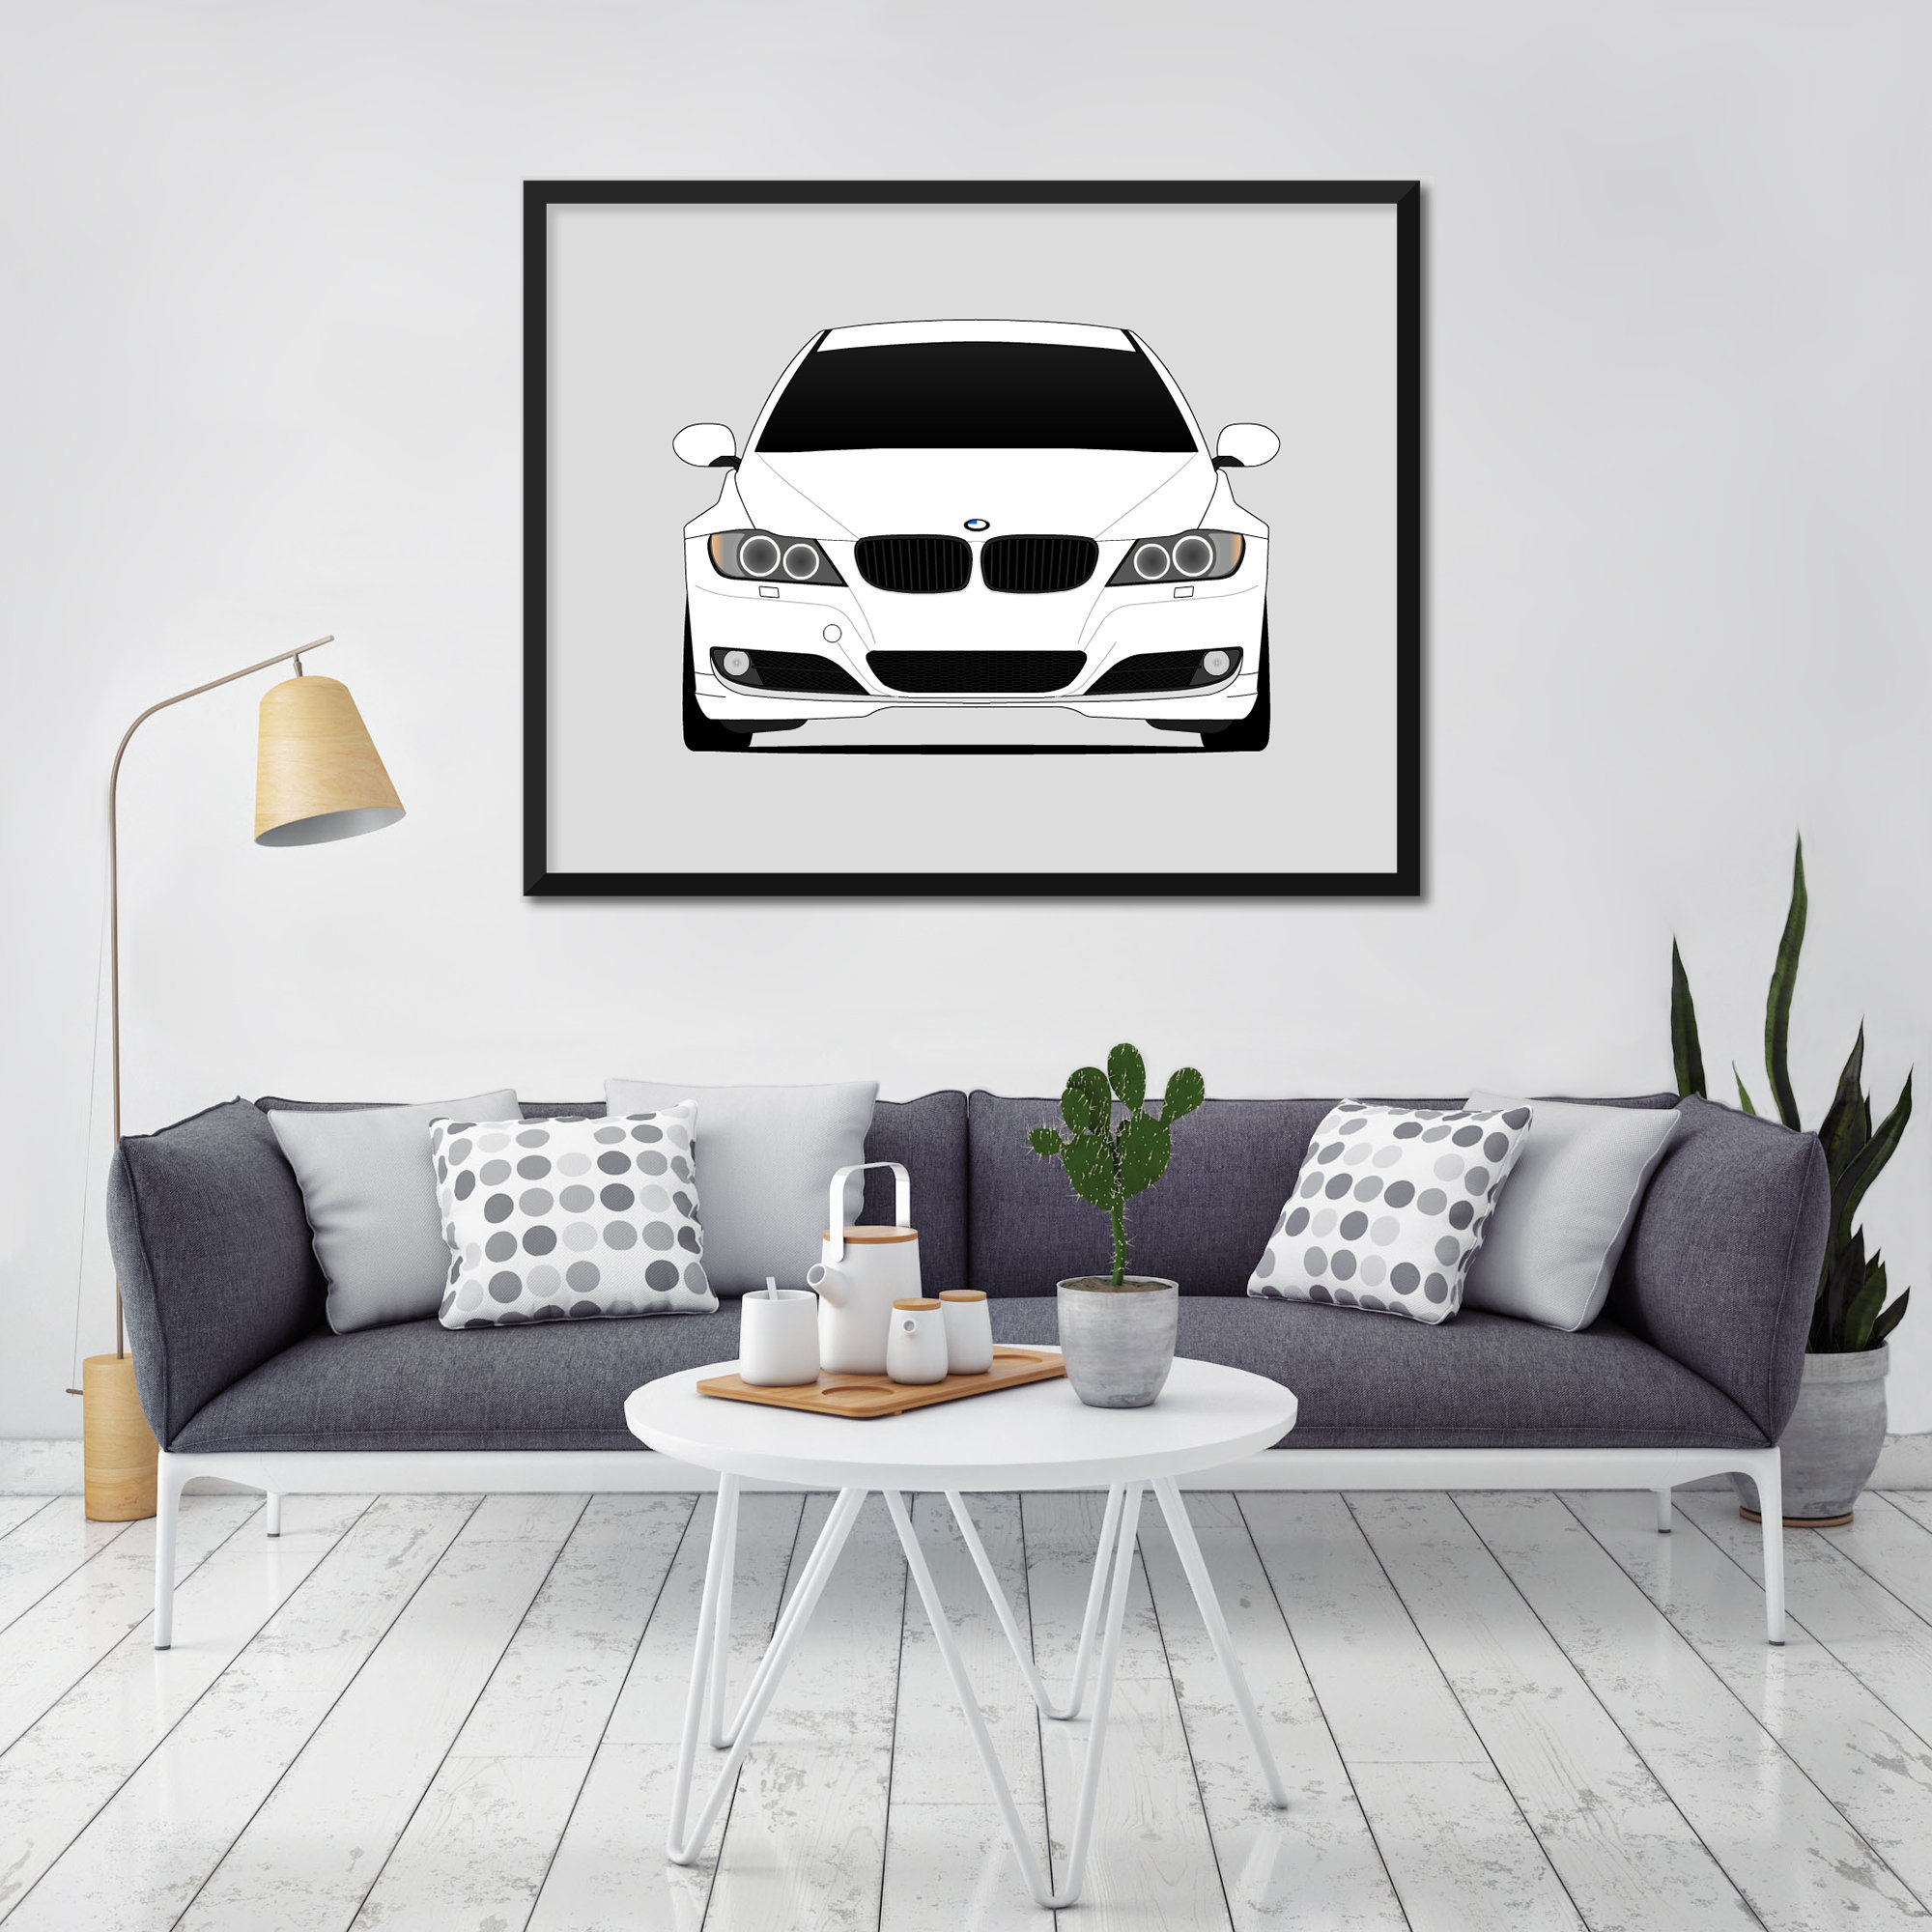  PRINTONIA Leinwand-bild 120x80cm BMW M Abstrakt Art